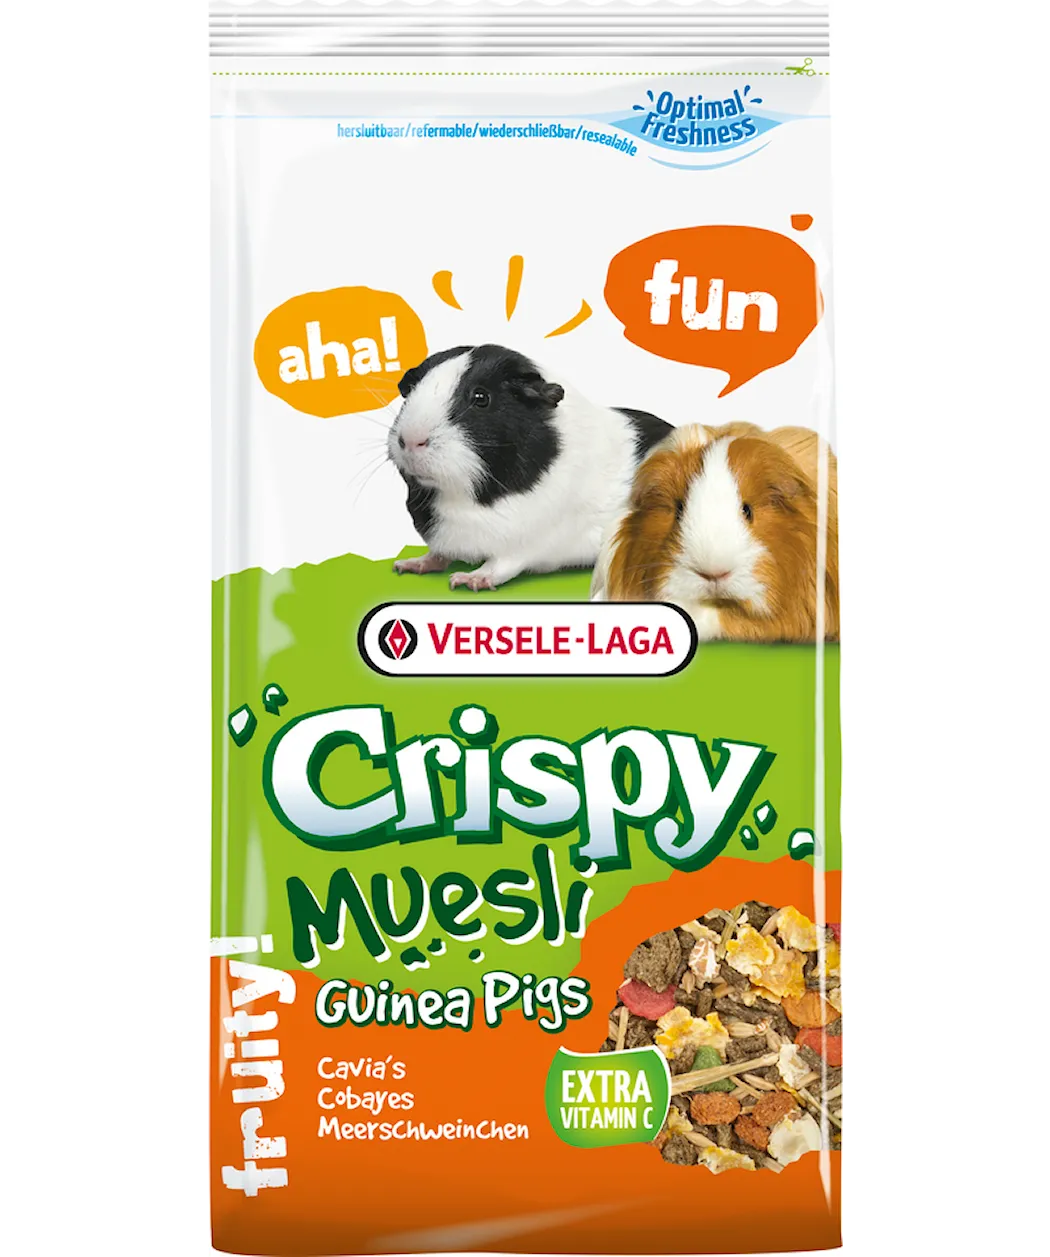 Crispy Muesli Guinea Pigs